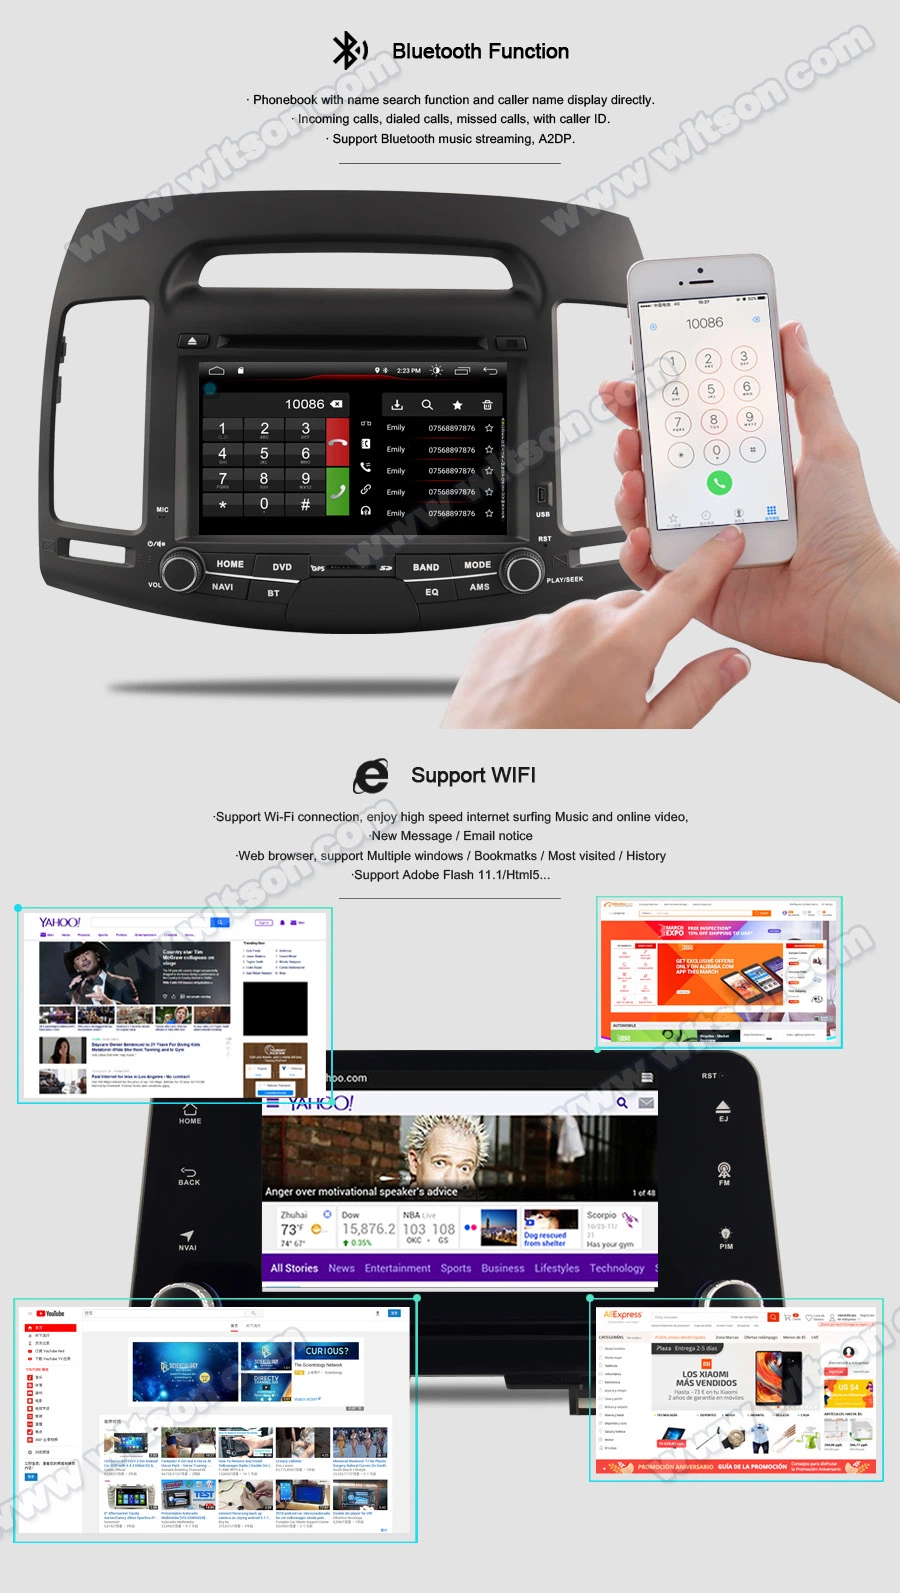 Witson Quad-Core Android 11 Car DVD GPS for Mercedes-Benz Slk200/Slk280/Slk350/Slk55 2004-2012 Support Full Video Output to Sub-Monitor Like Mirror Link